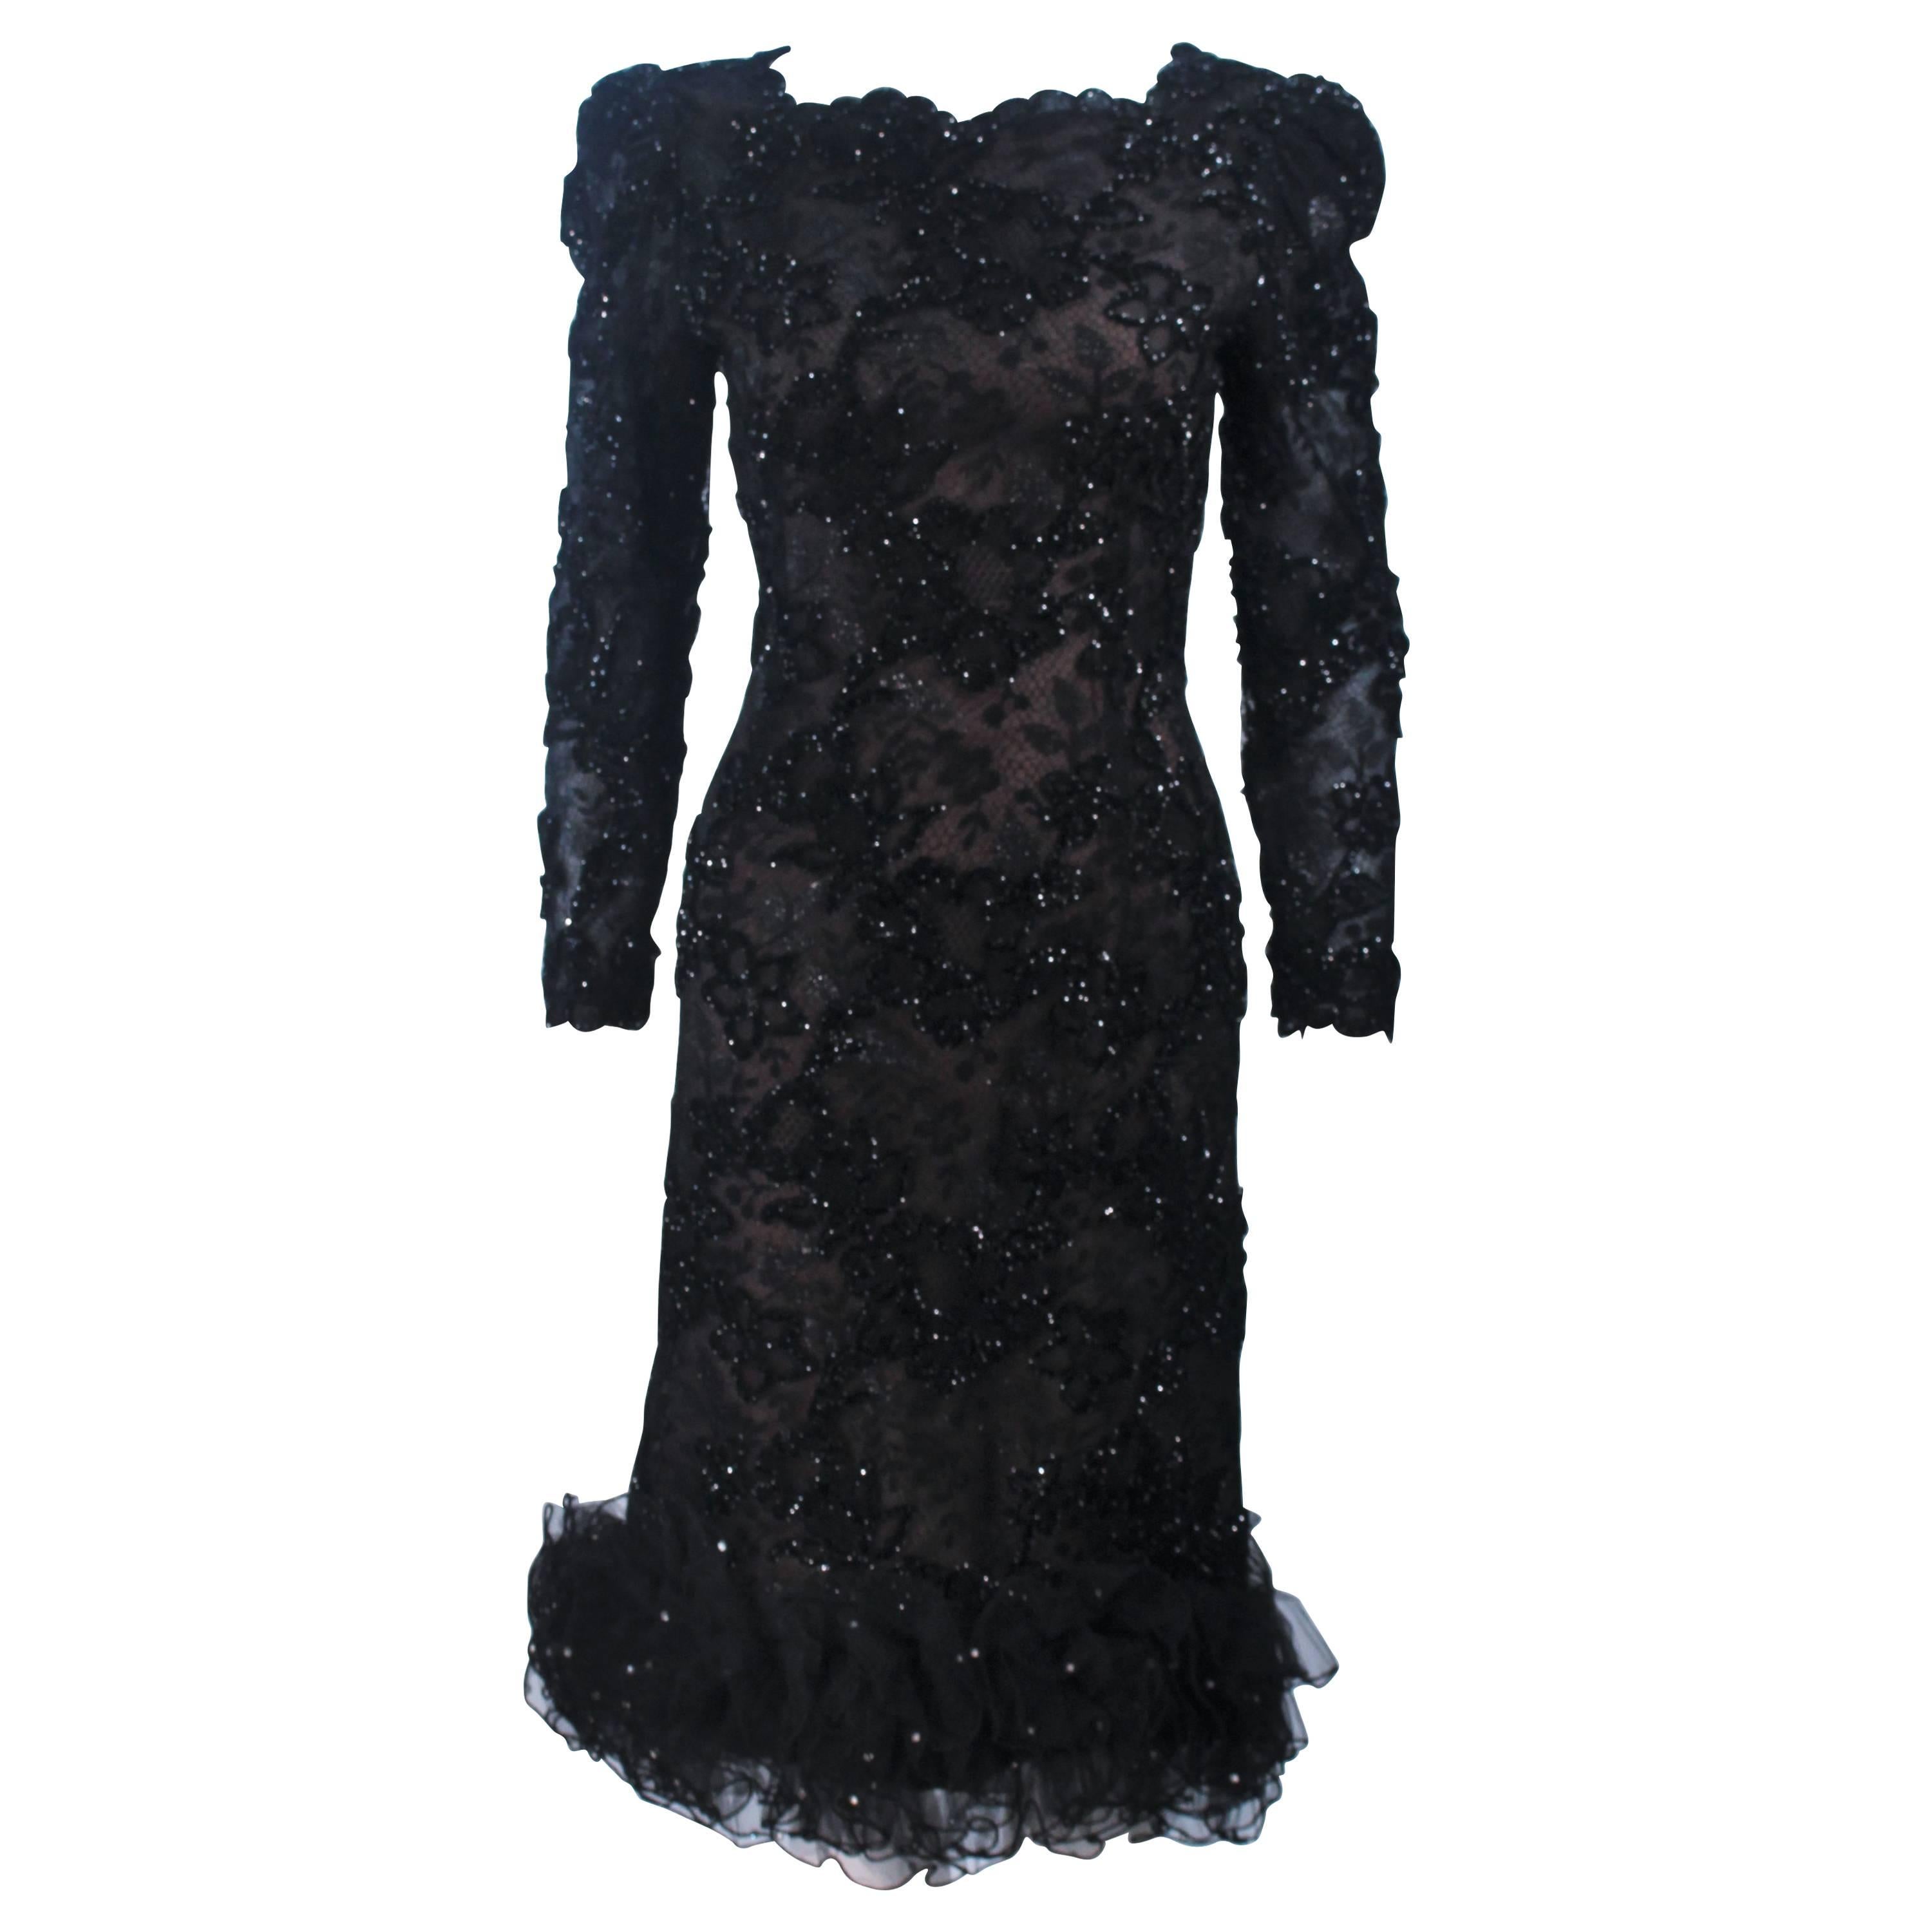 OSCAR DE LA RENTA Black Lace Cocktail Dress Ruffled Hem and Rhinestones Size 6-8 For Sale